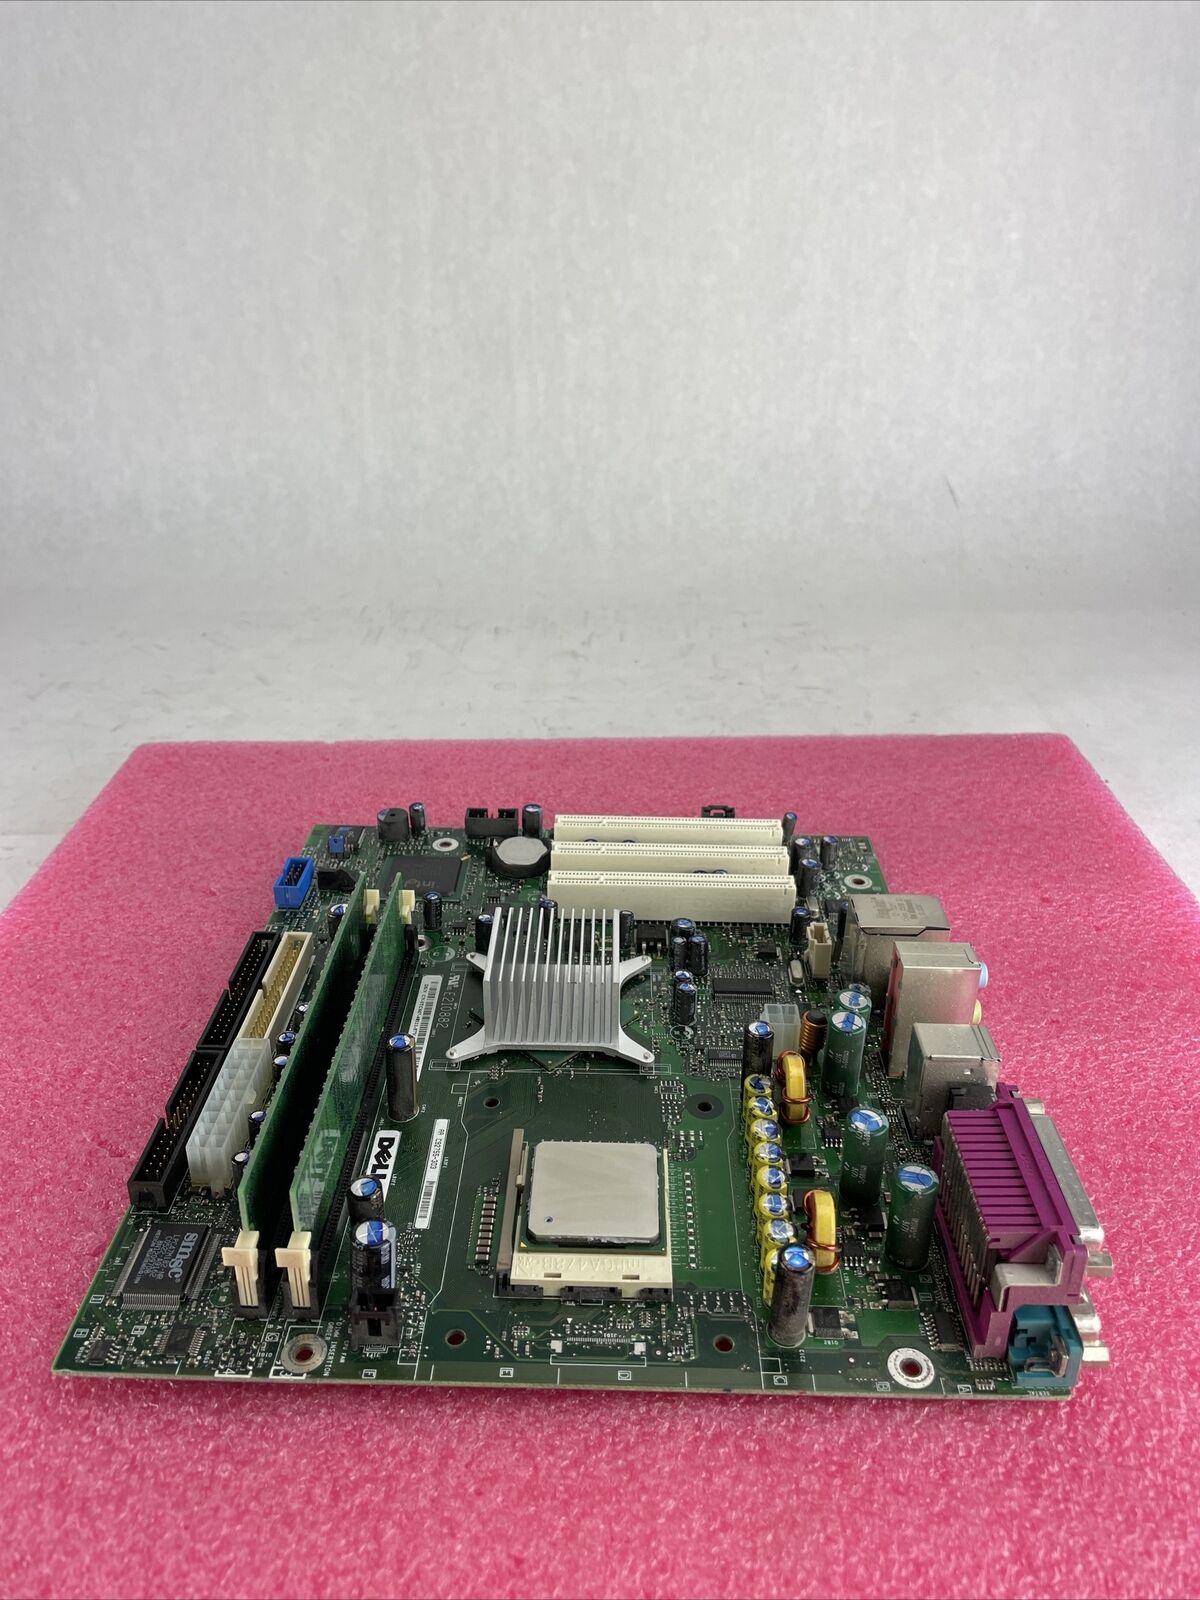 Dell Dimension 3000 Motherboard Intel Pentium 4 2.8GHz 512MB RAM